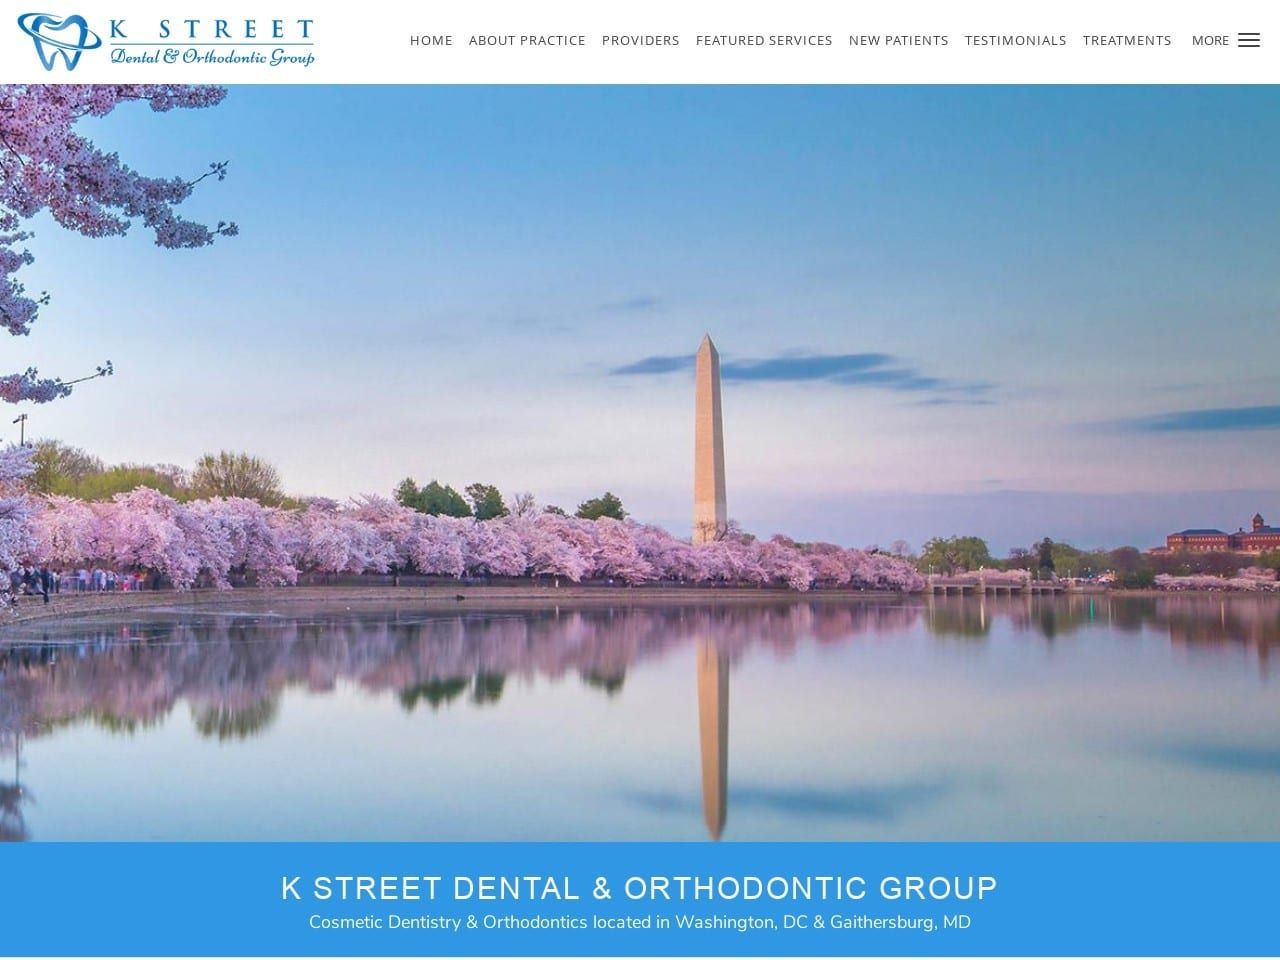 K Street Dental & Orthodontic Group Website Screenshot from kstreetdental.com